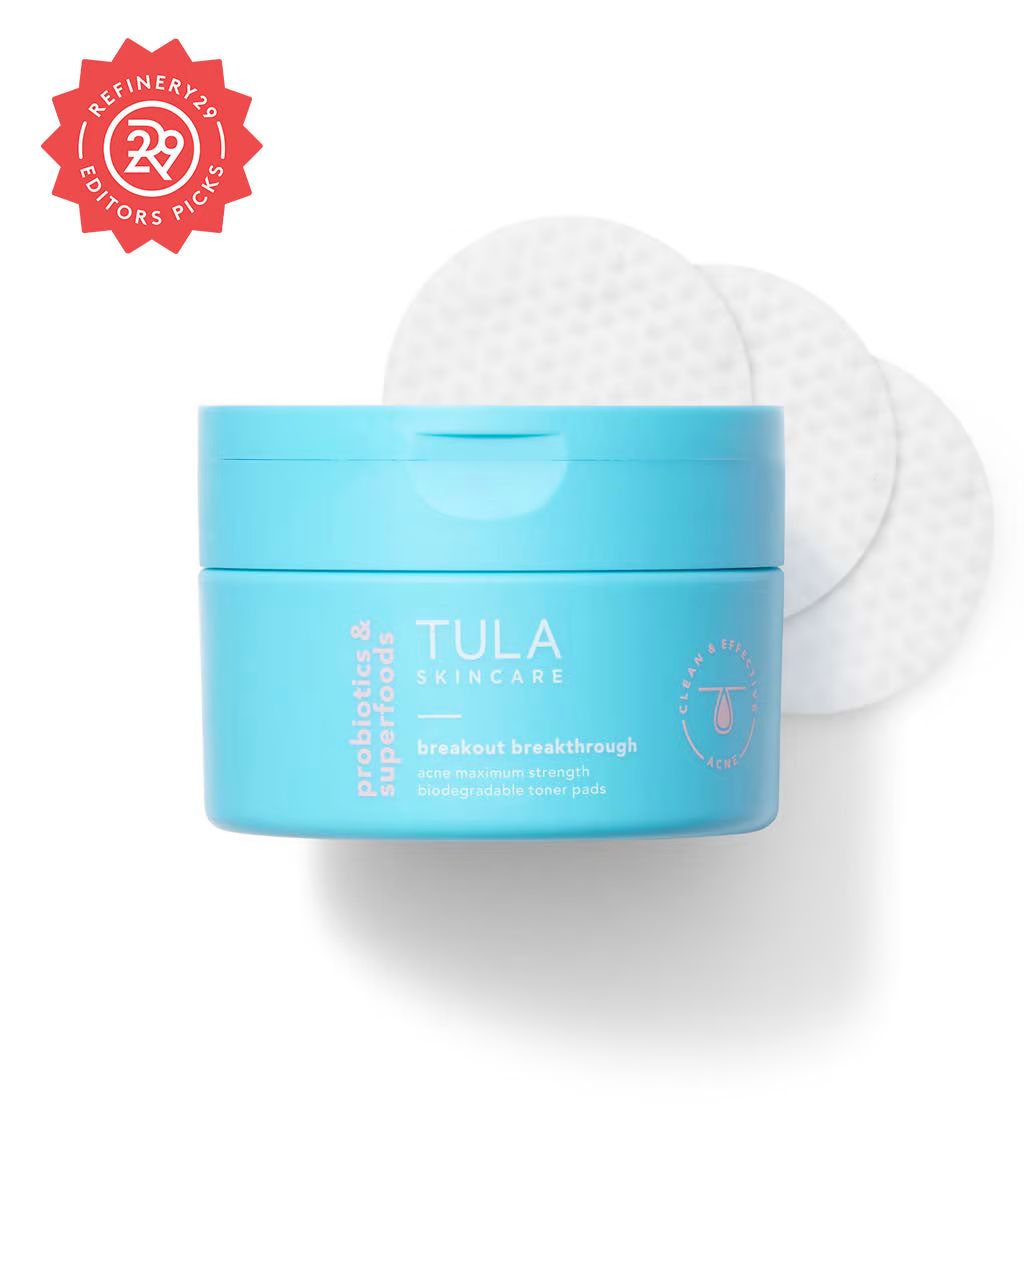 acne maximum strength biodegradable toner pads | Tula Skincare